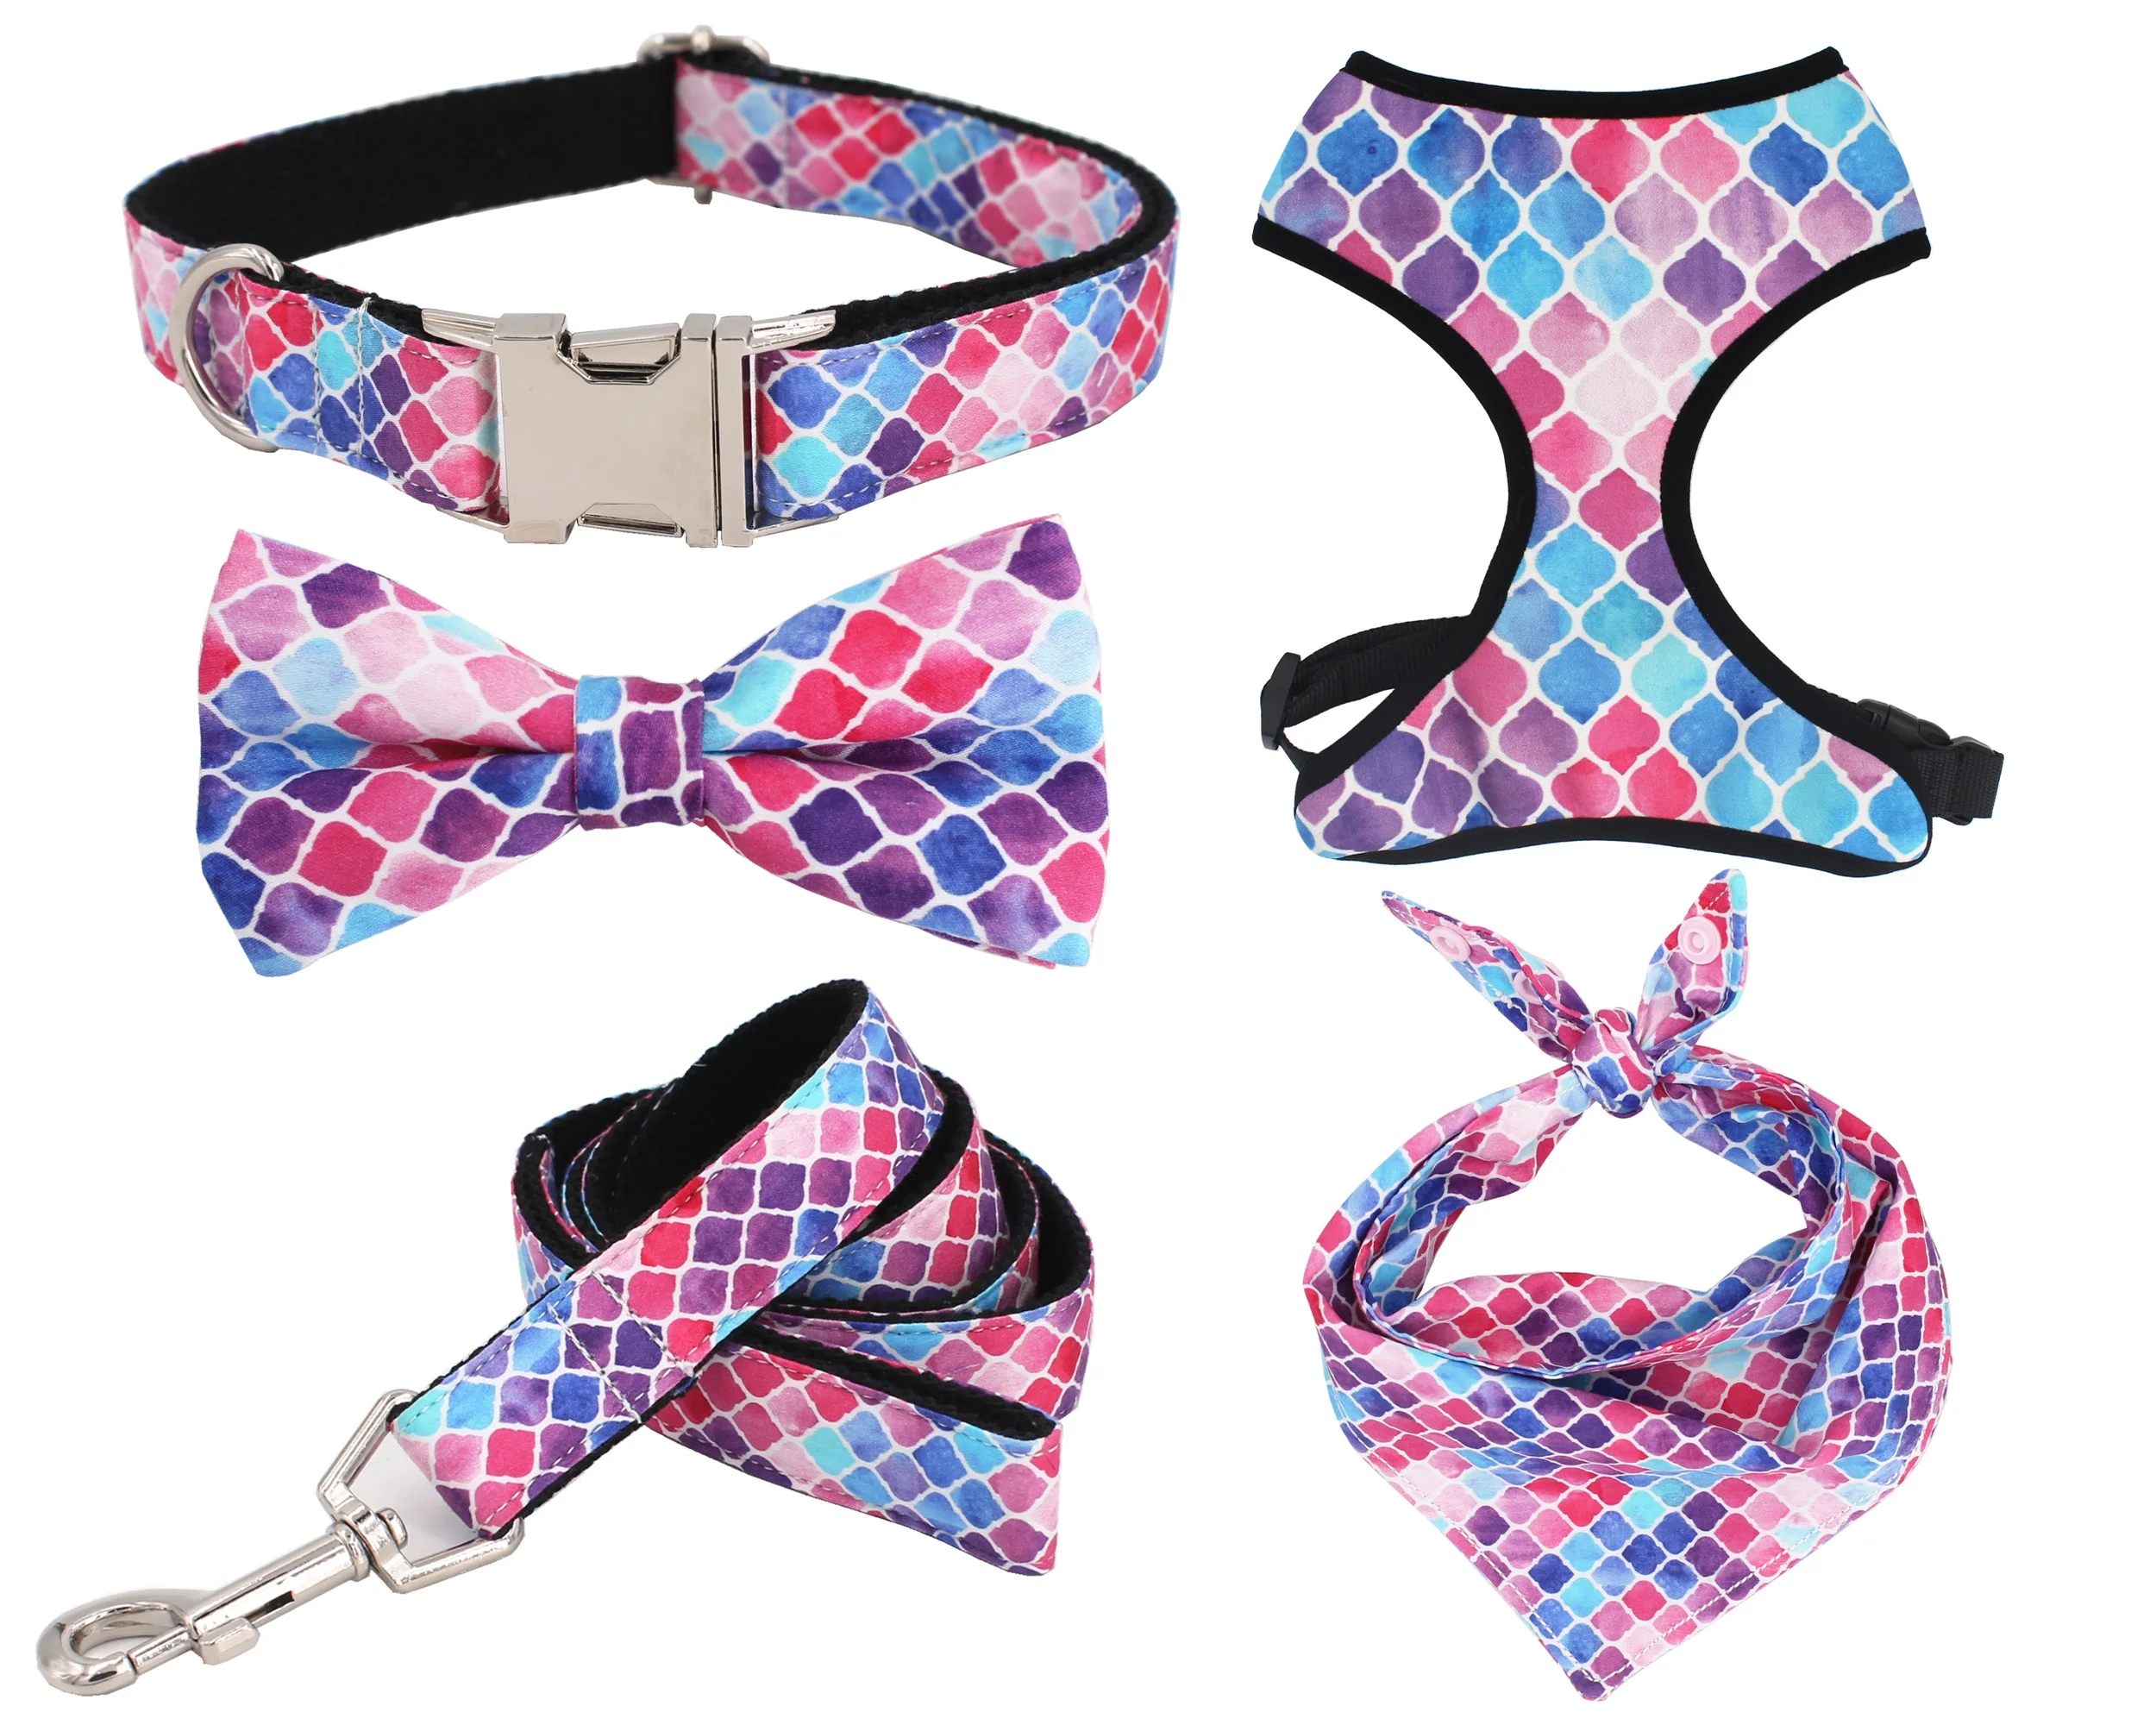 

Top Seller Custom Design 2 in 1 Reversible Dog Harness Neoprene Fabric Pet Dog Harness, Pink plaid